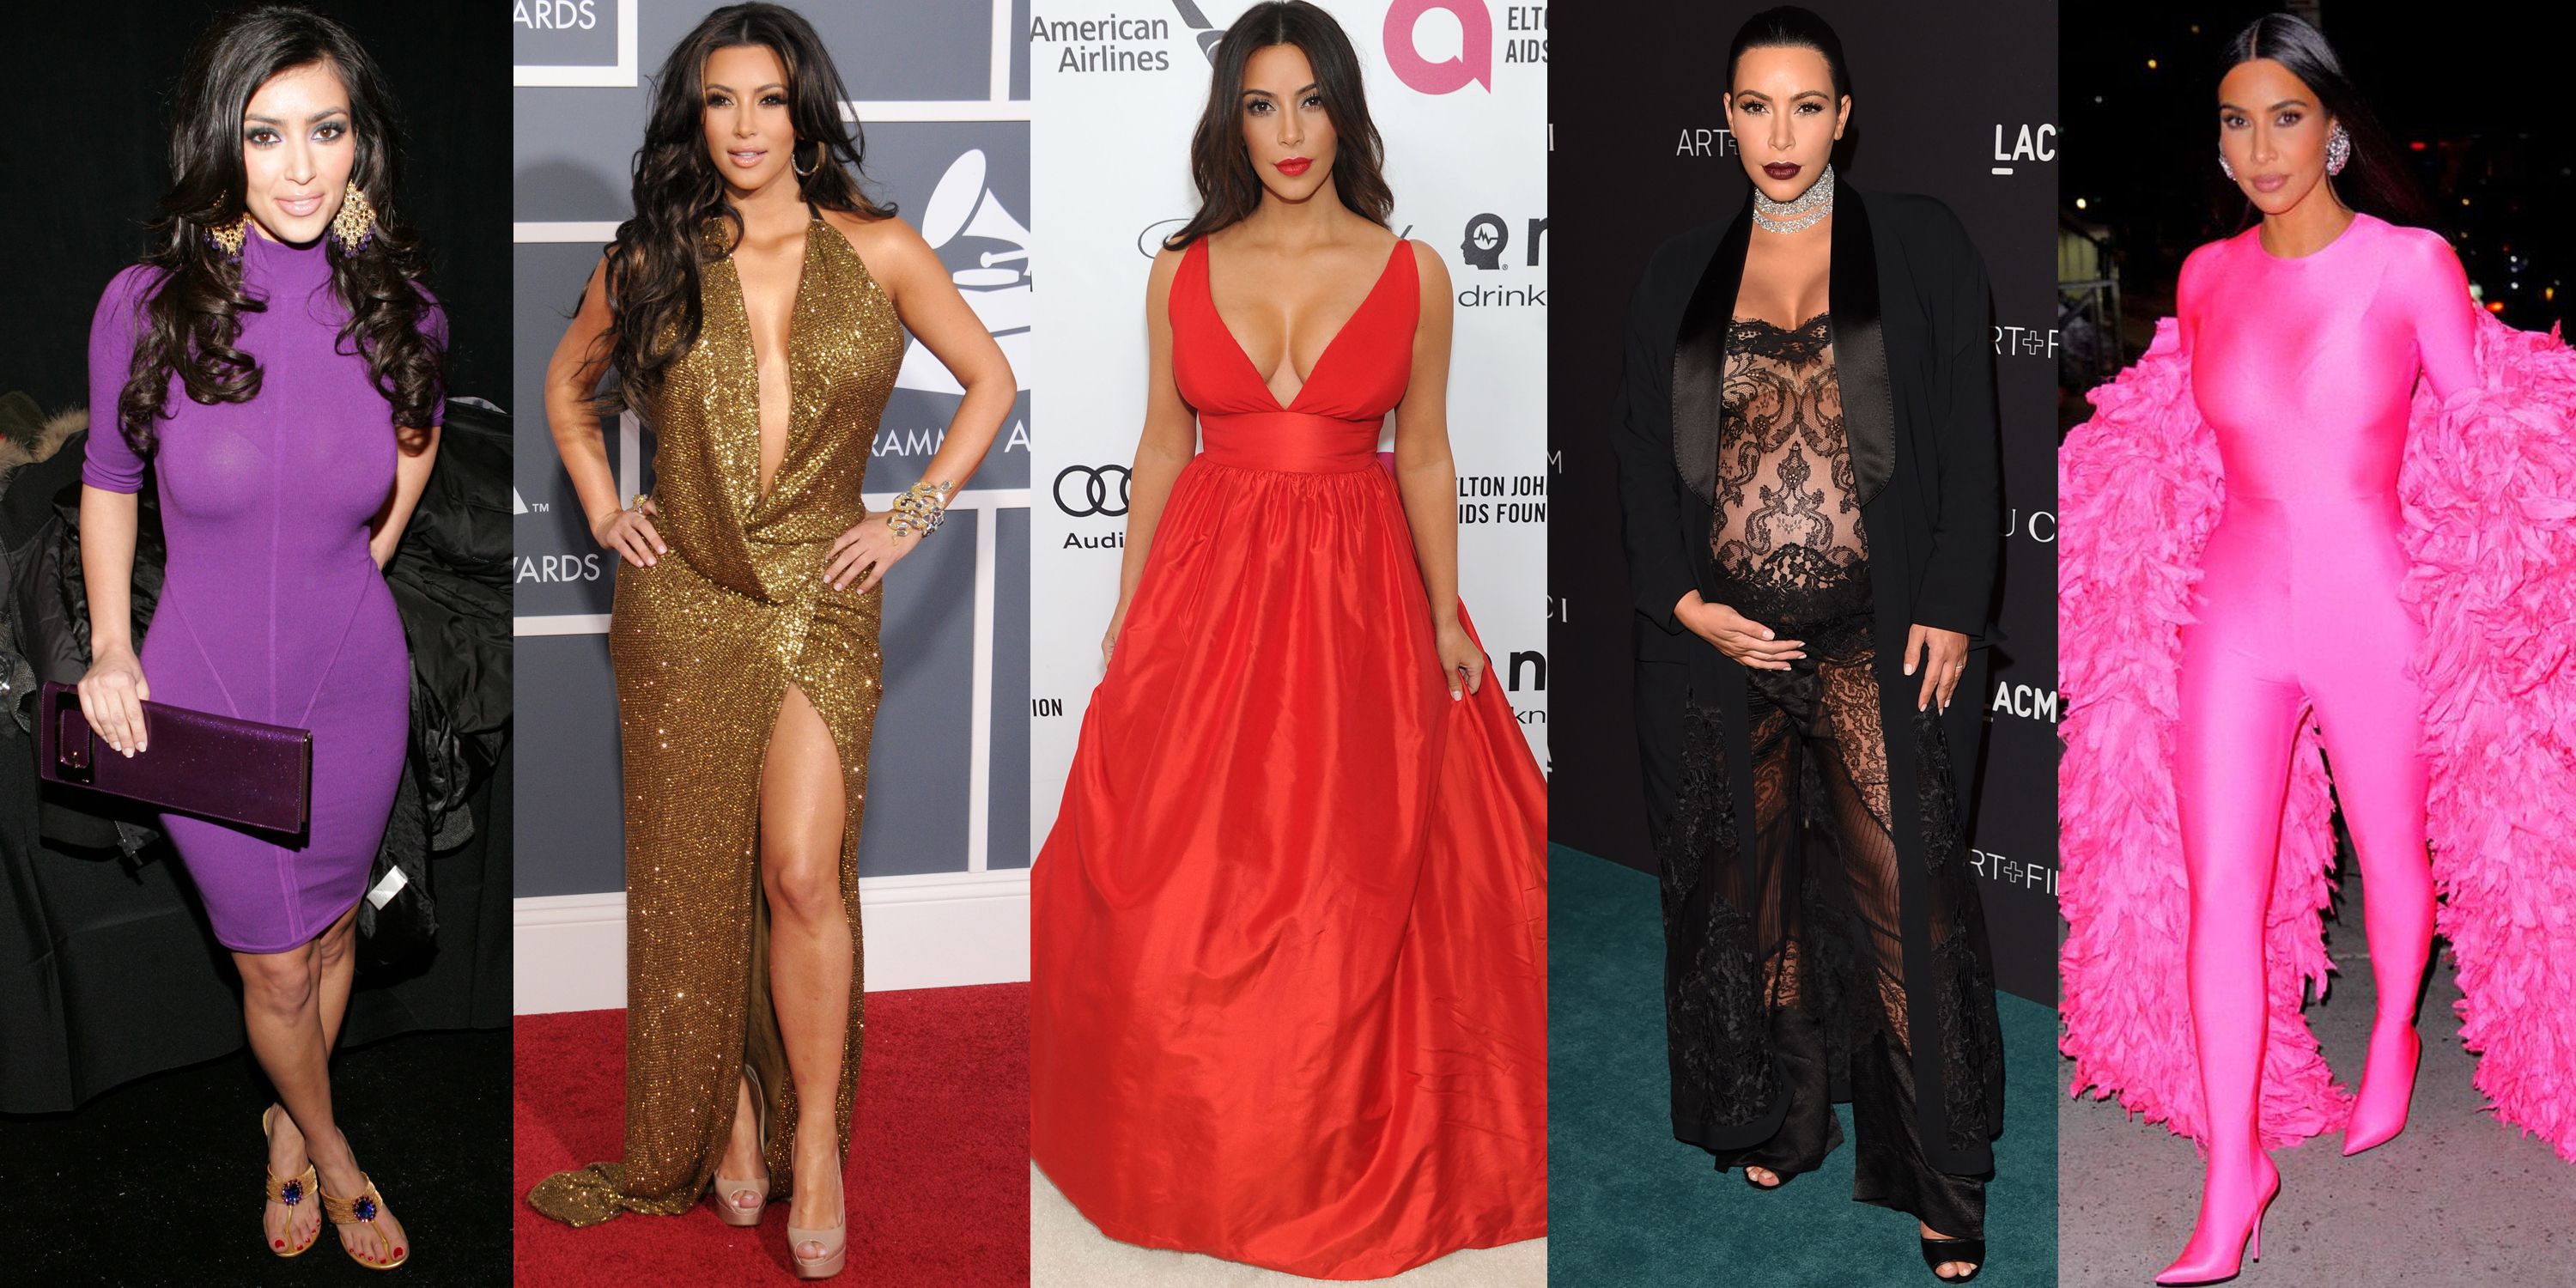 Kim Kardashian  Kardashian style, Kim kardashian outfits, Kim kardashian  style